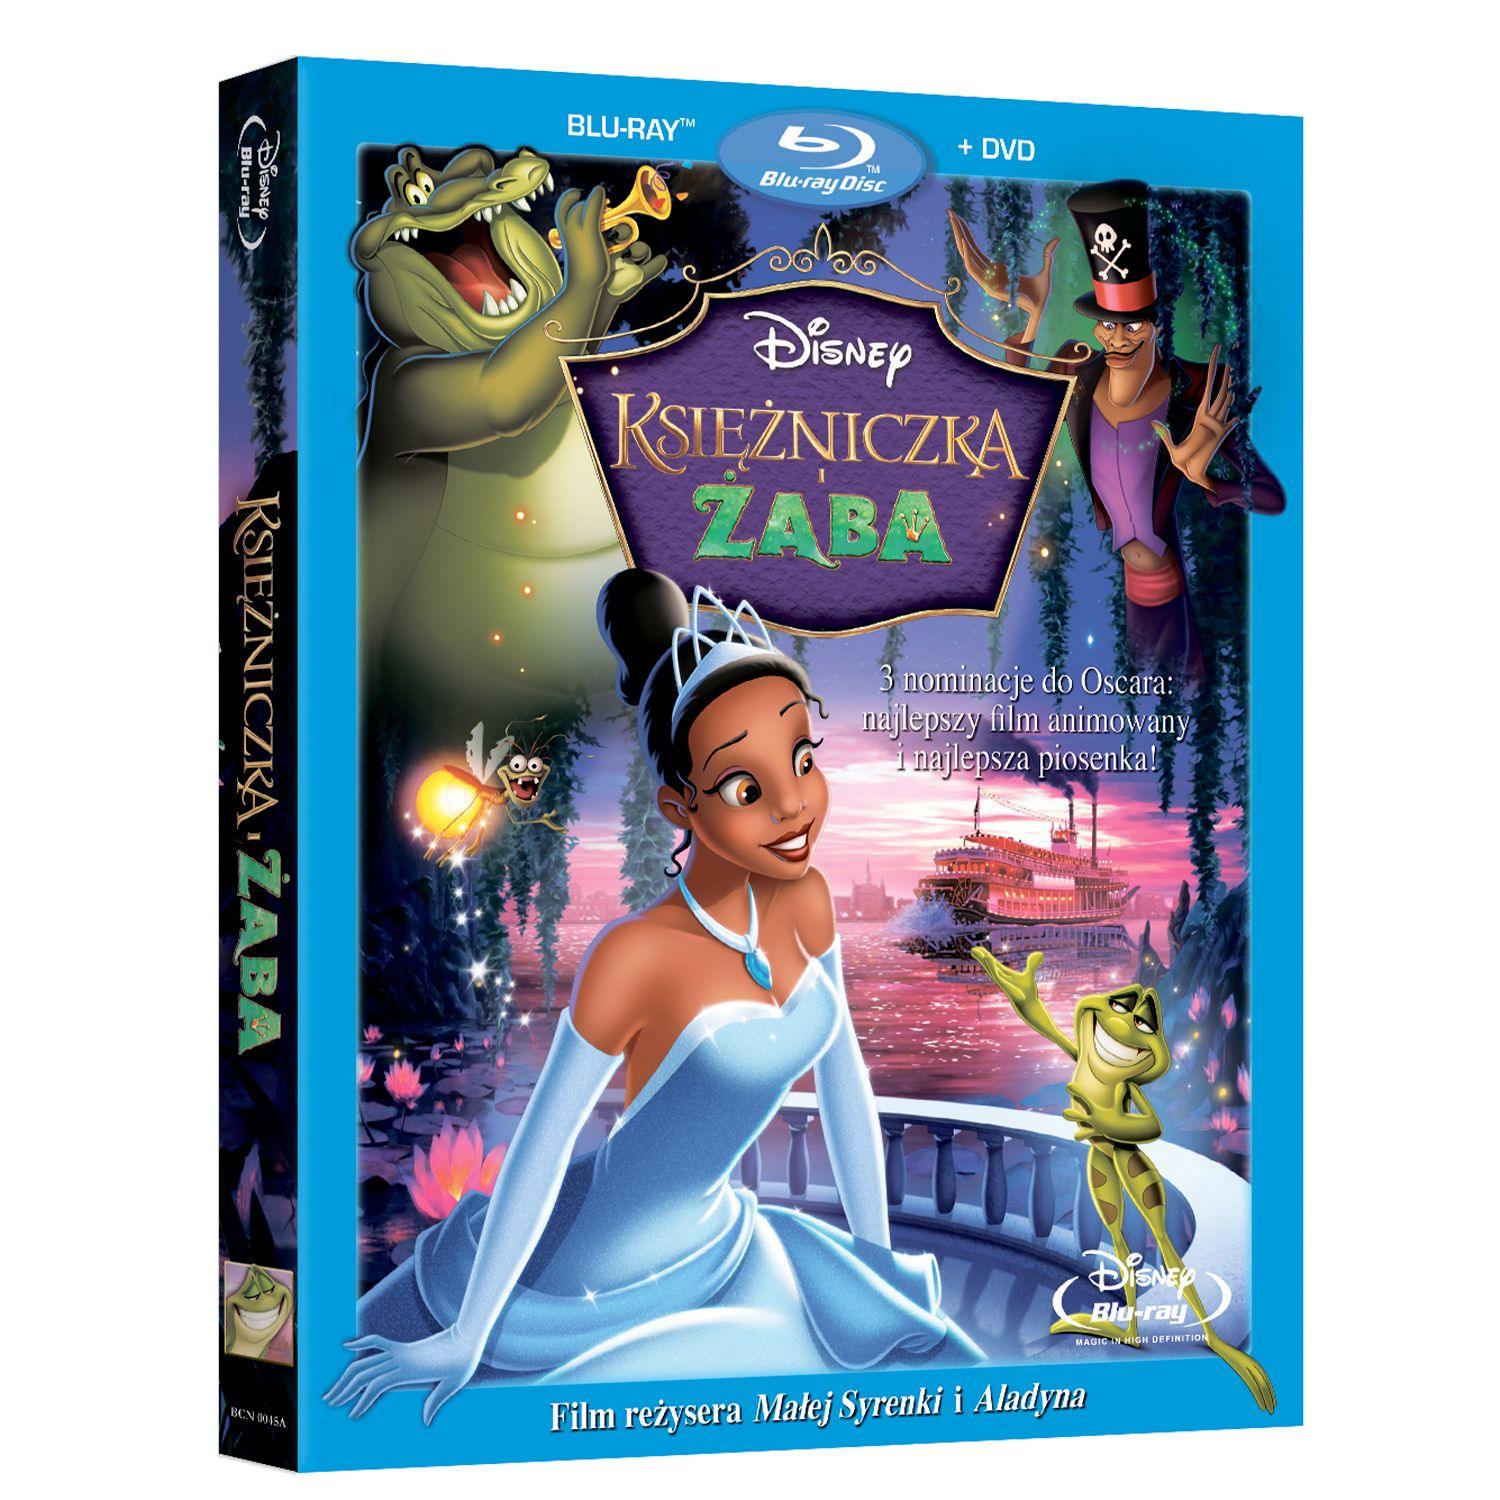 Принцесса и лягушка (Blu-ray)